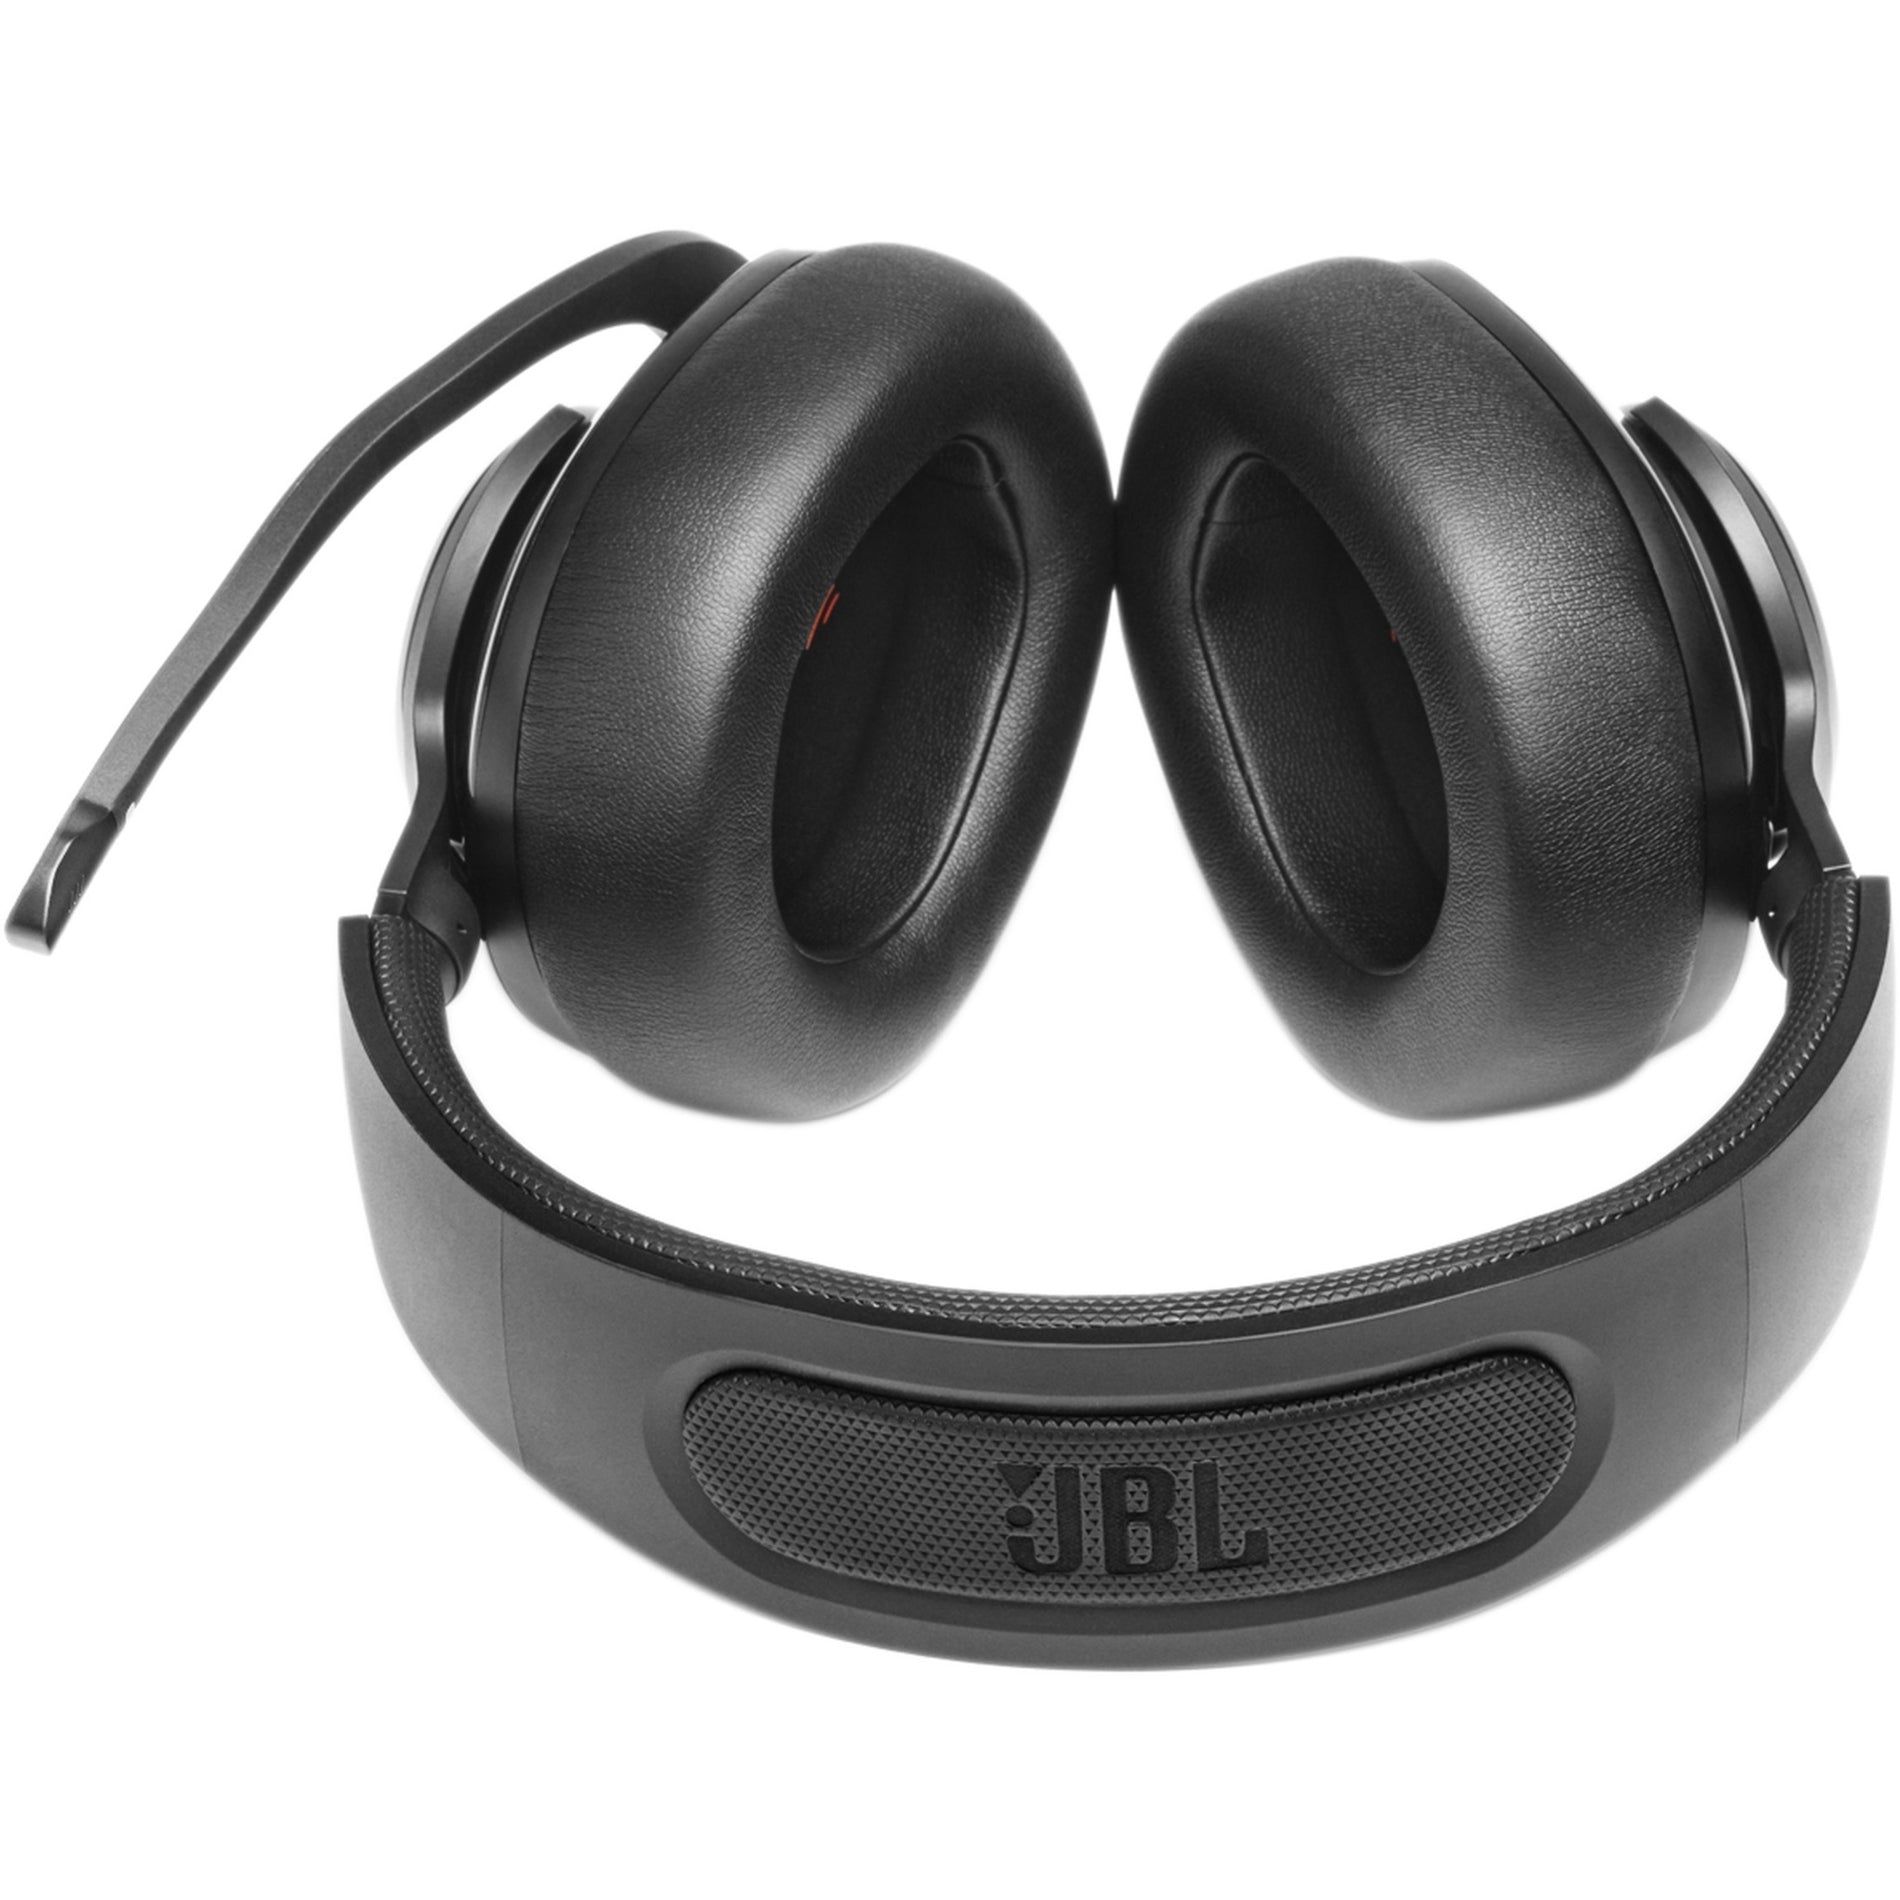 JBL JBL-QUANTUM400P Quantum 400 Gaming Headset, Stereo Sound, Comfortable Fit, Lightweight